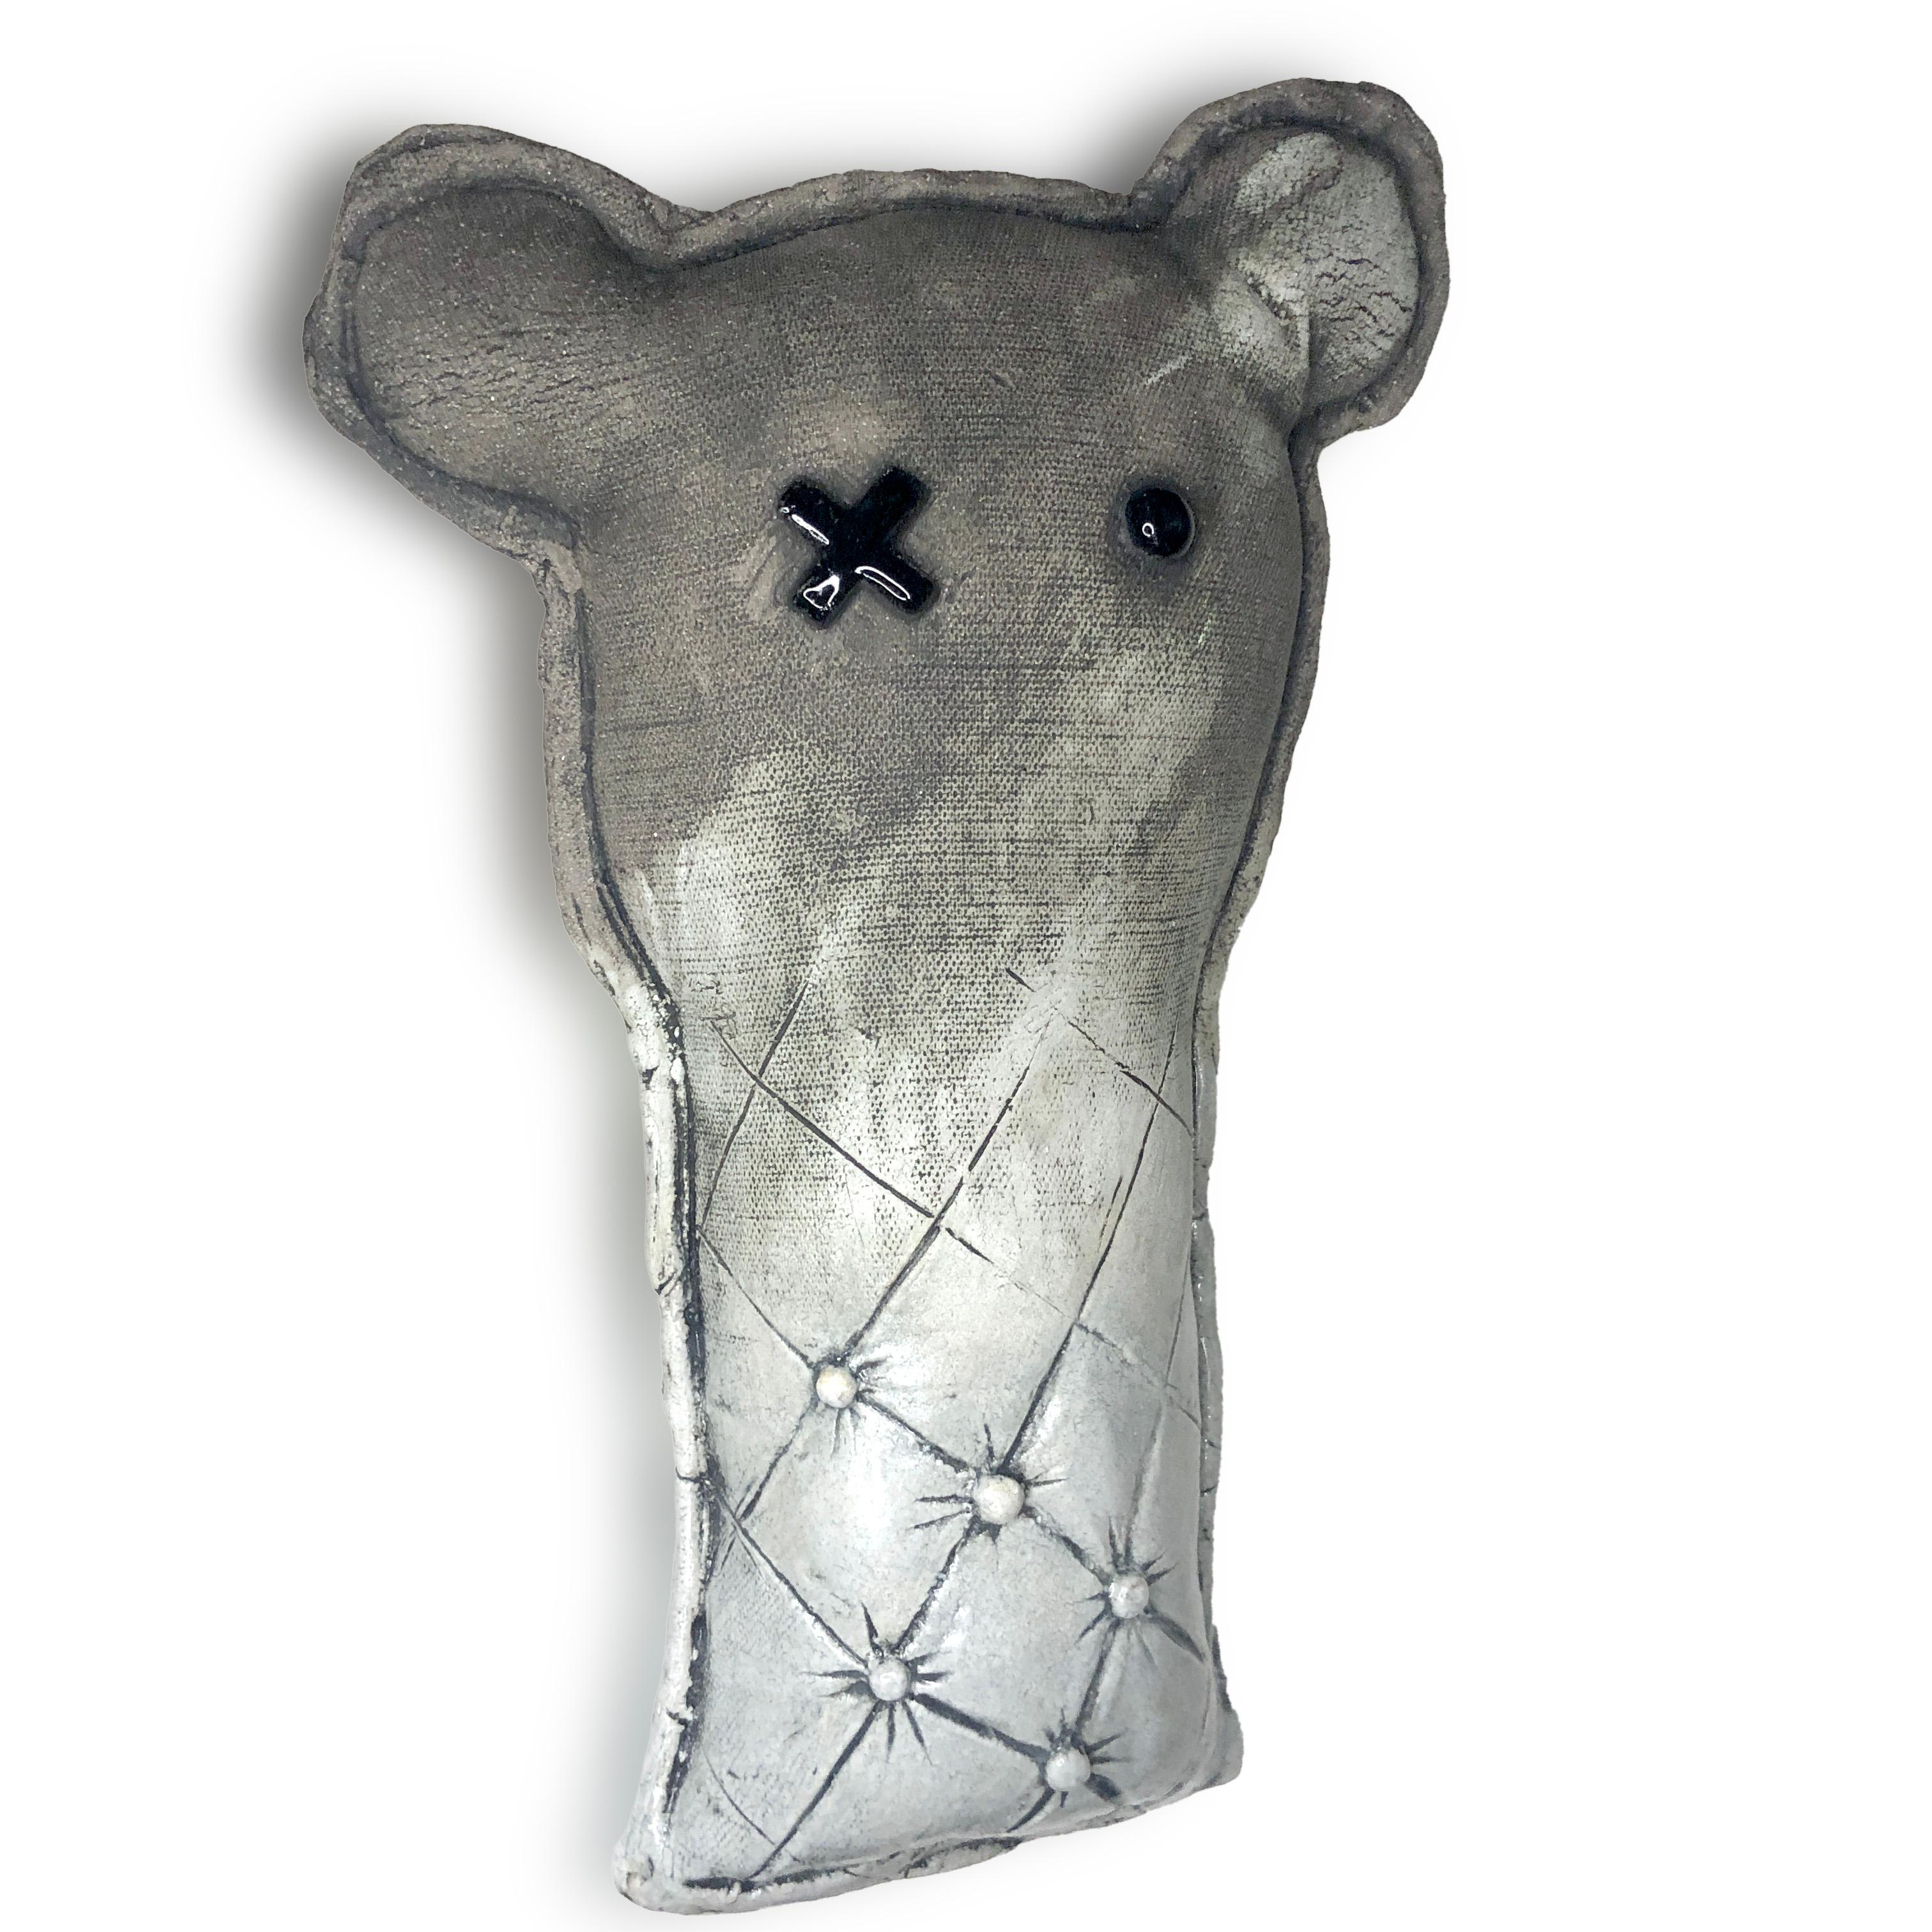 Renate Frotscher Figurative Sculpture - Ceramic 'Teddy G" bear pastel grey and white  - Contemporary Ceramic Wall Art